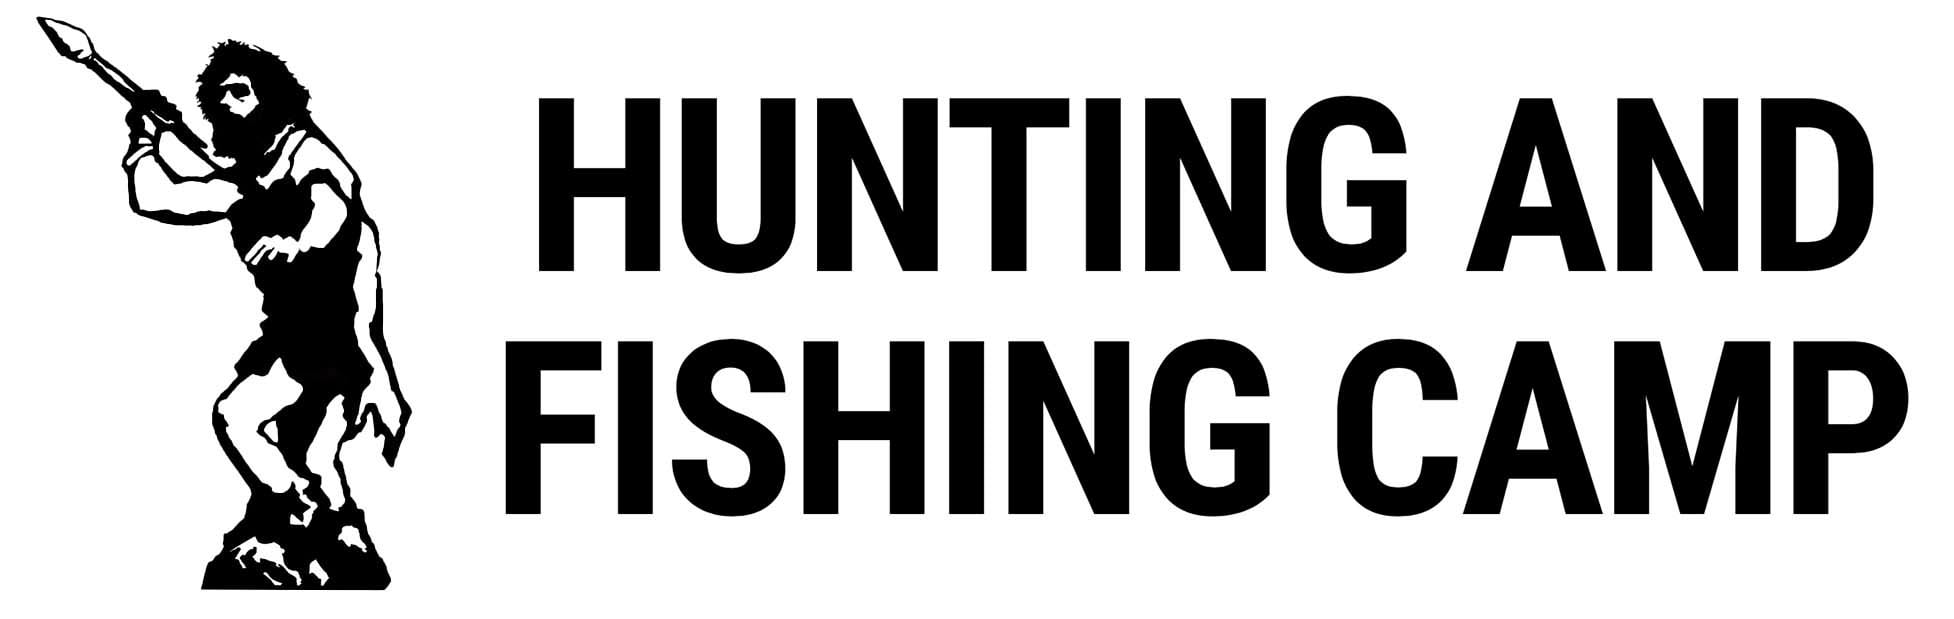 Hunting and Fishing Camp